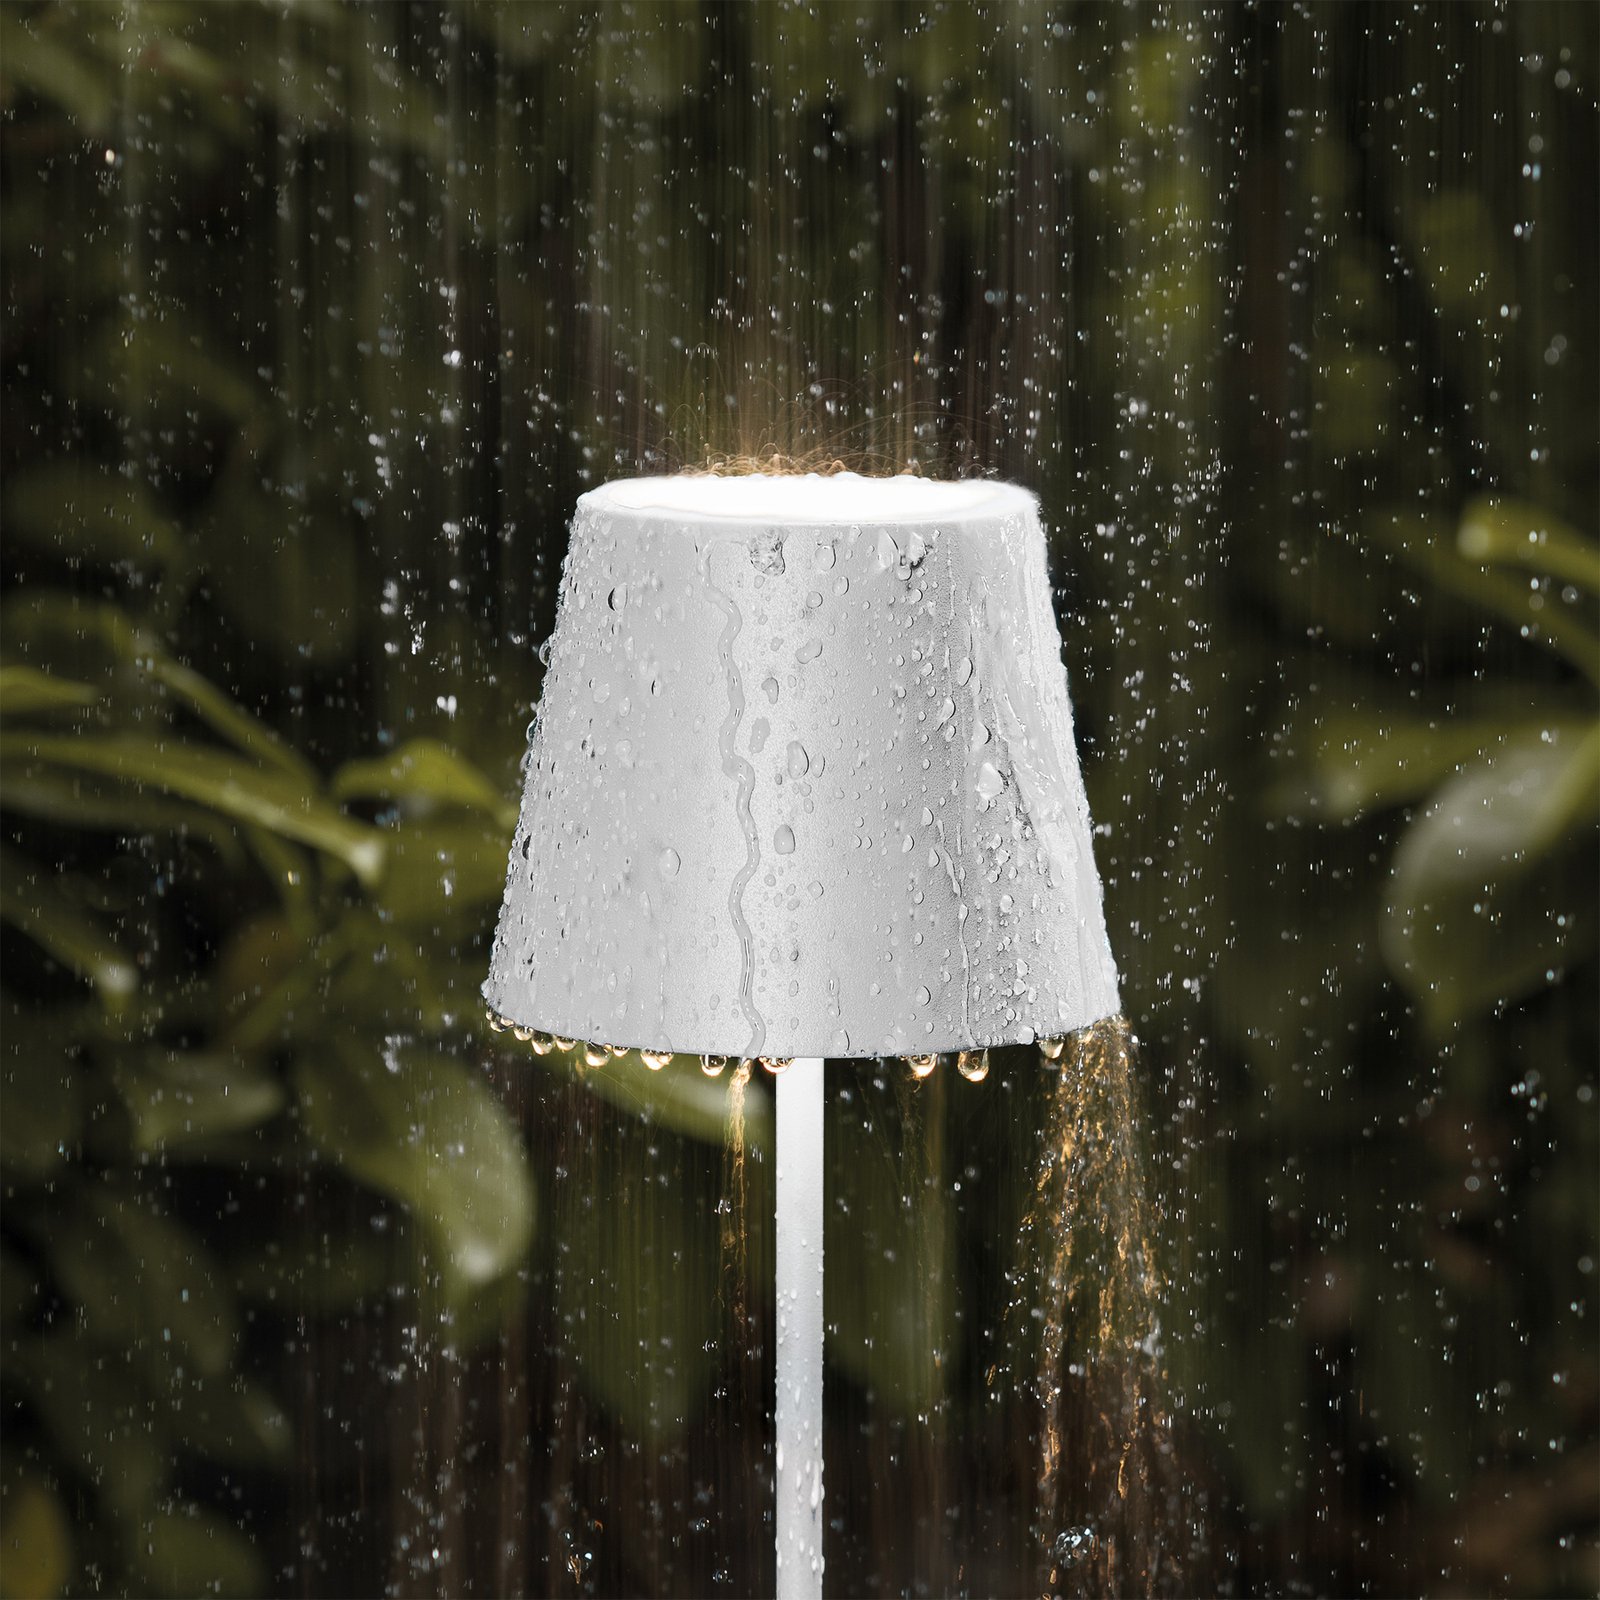 Lampe à poser LED Nuindie ronde 38 cm, blanc neige